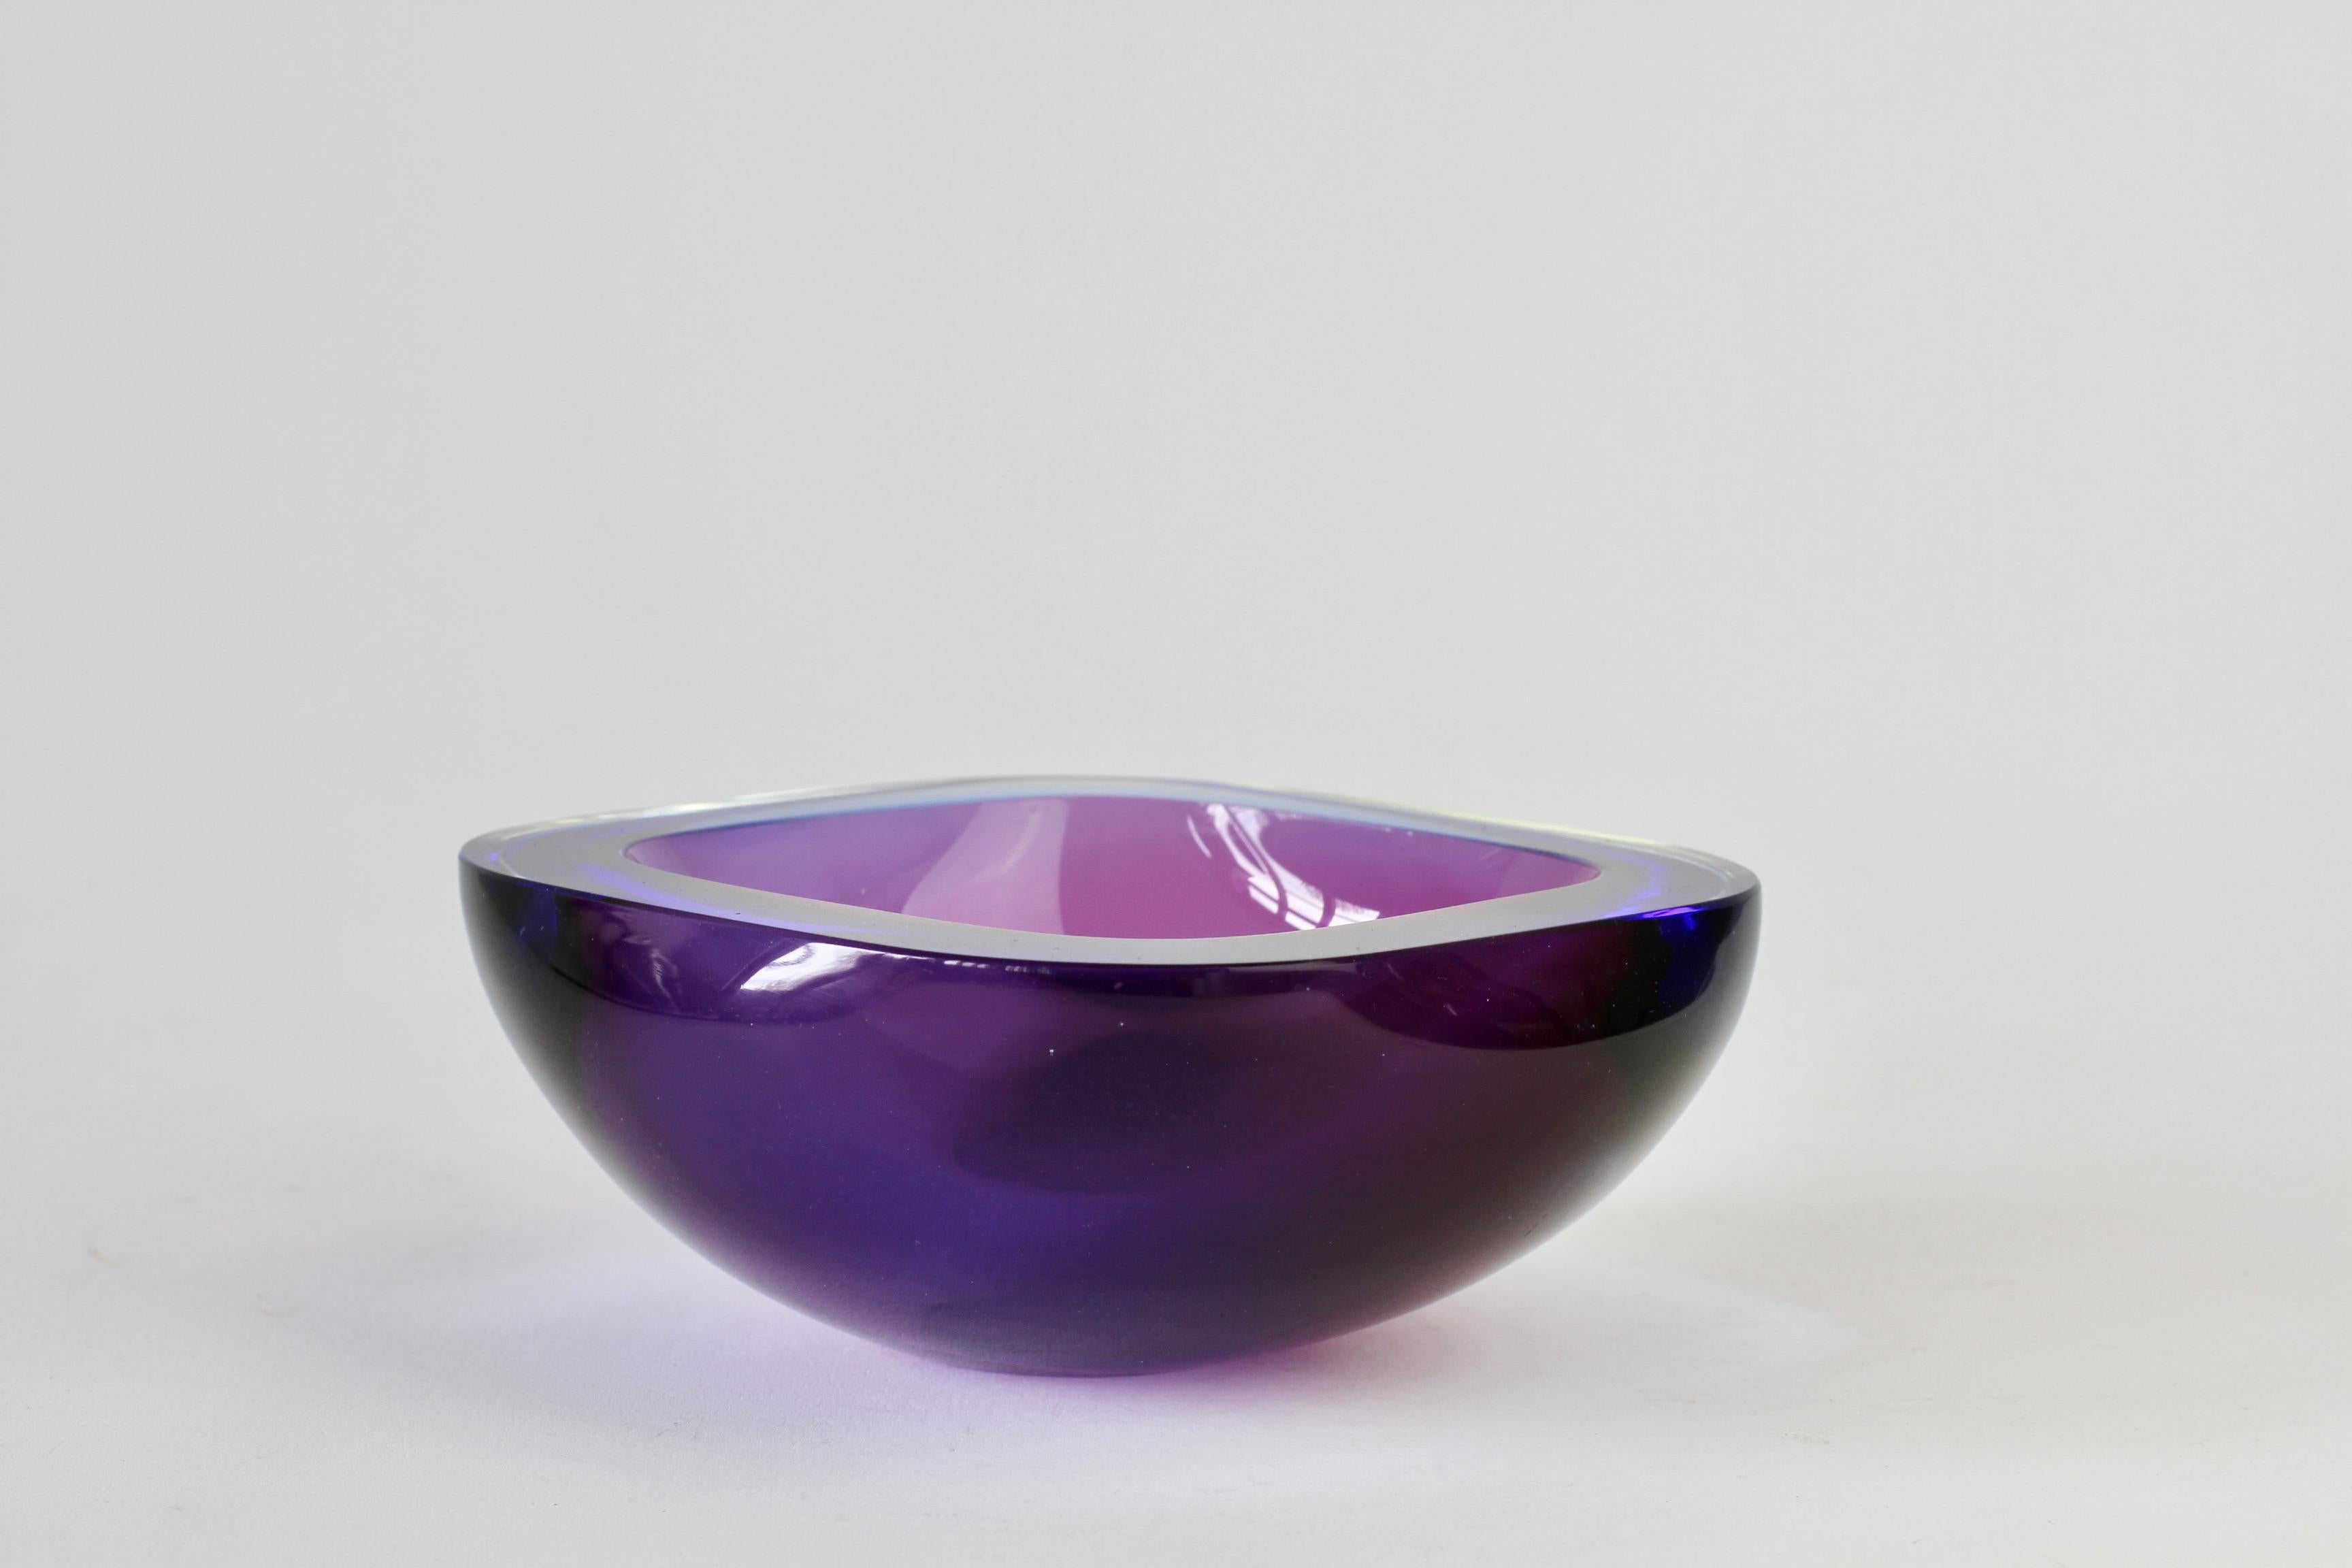 Blown Glass Murano Venetian made Blue & Purple Sommerso Glass Bowl, Dish or Ashtray, c.1965